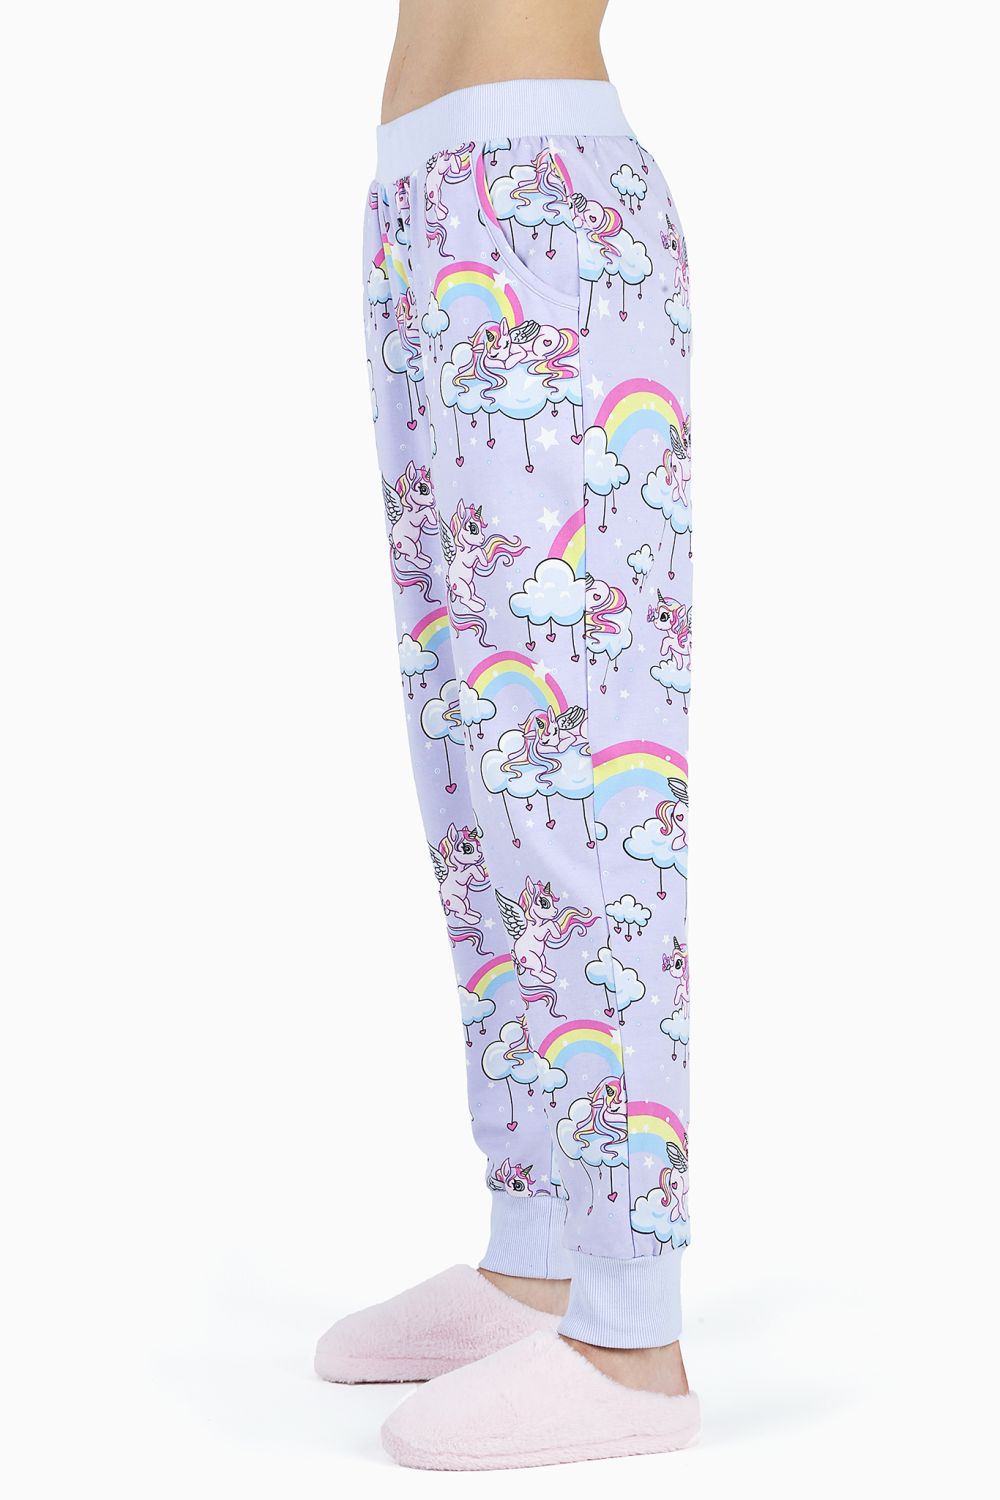 Very Important Pajamas Light Pink & Blue Star Unicorn Pajama Pants - Women  | Best Price and Reviews | Zulily